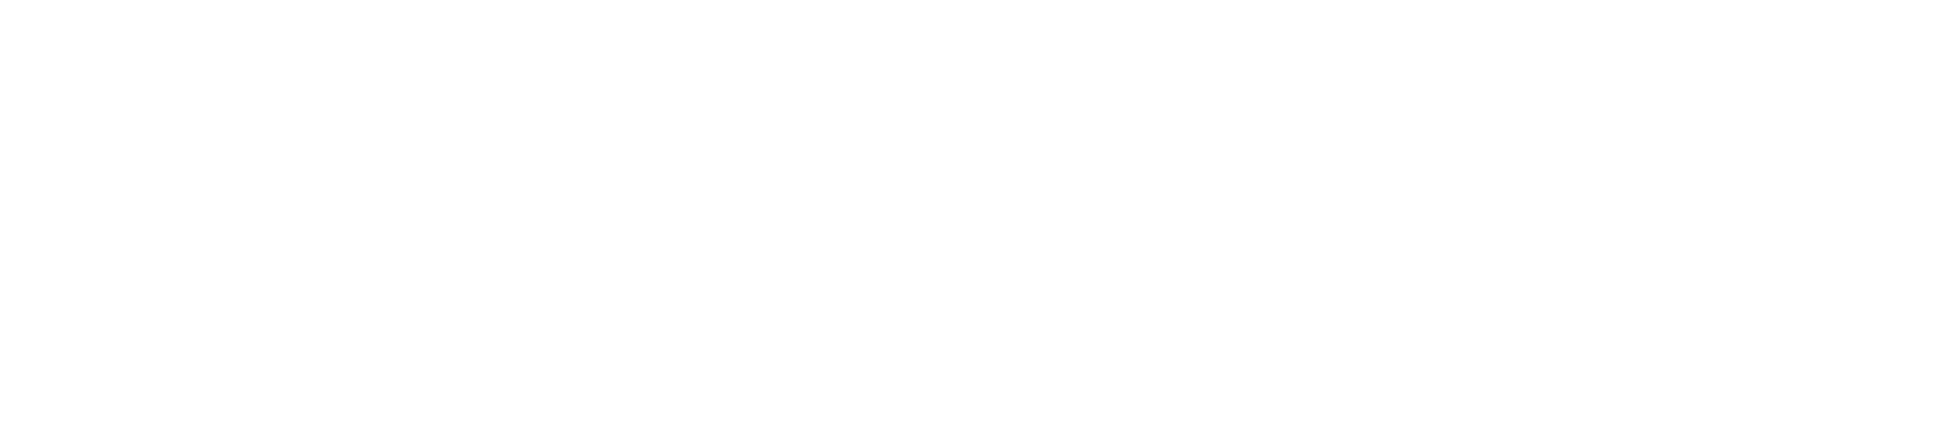 Old Soul Life Coach Logo - File -- white